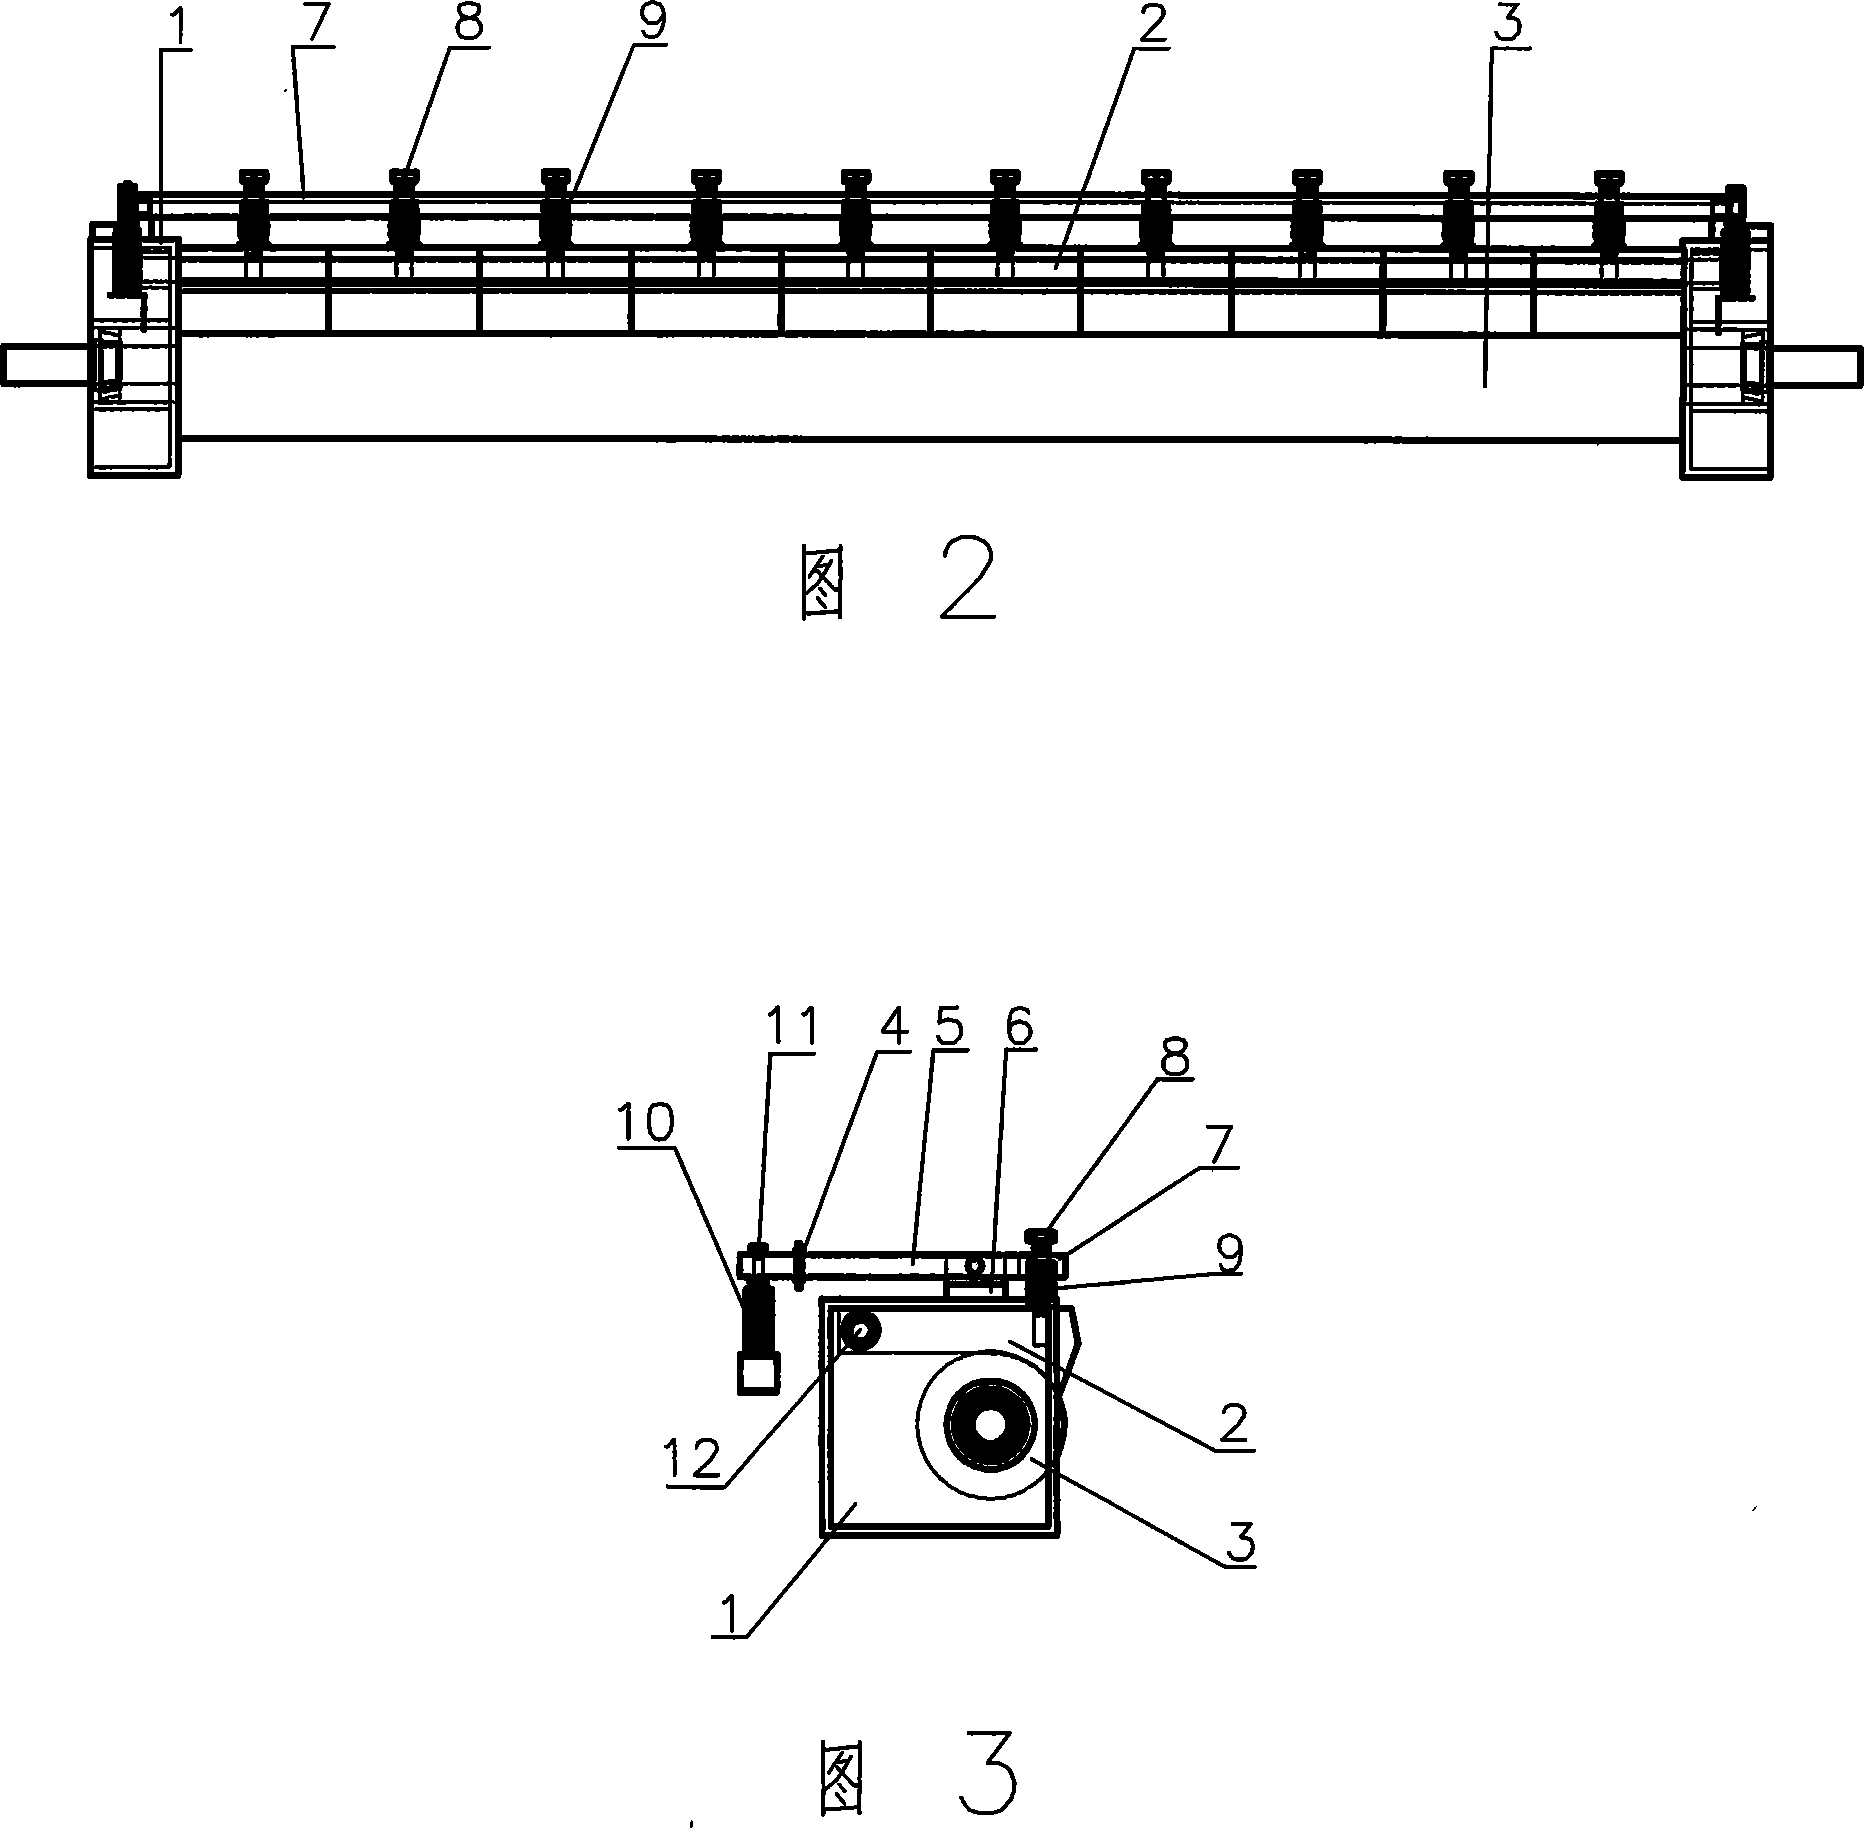 Segmented cotton feeding device of carding machine